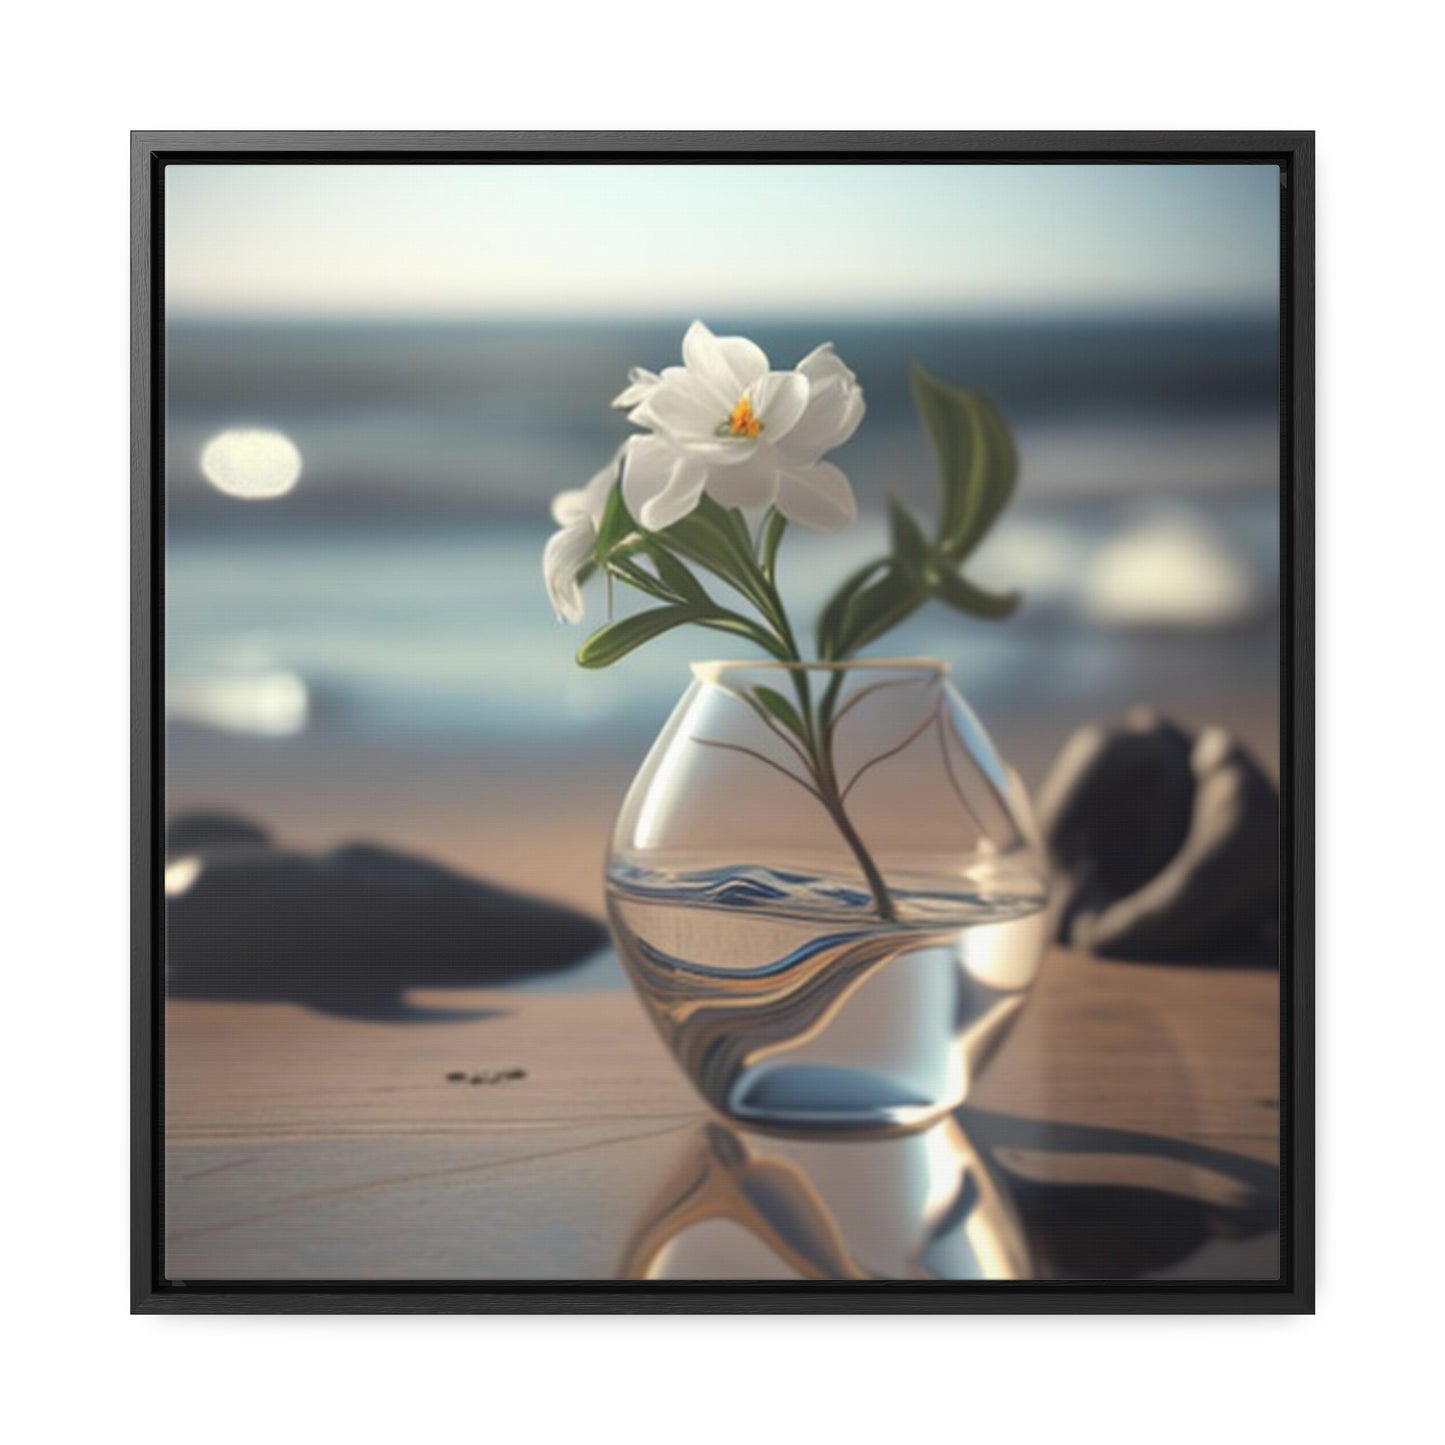 Gallery Canvas Wraps, Square Frame Jasmine glass vase 3